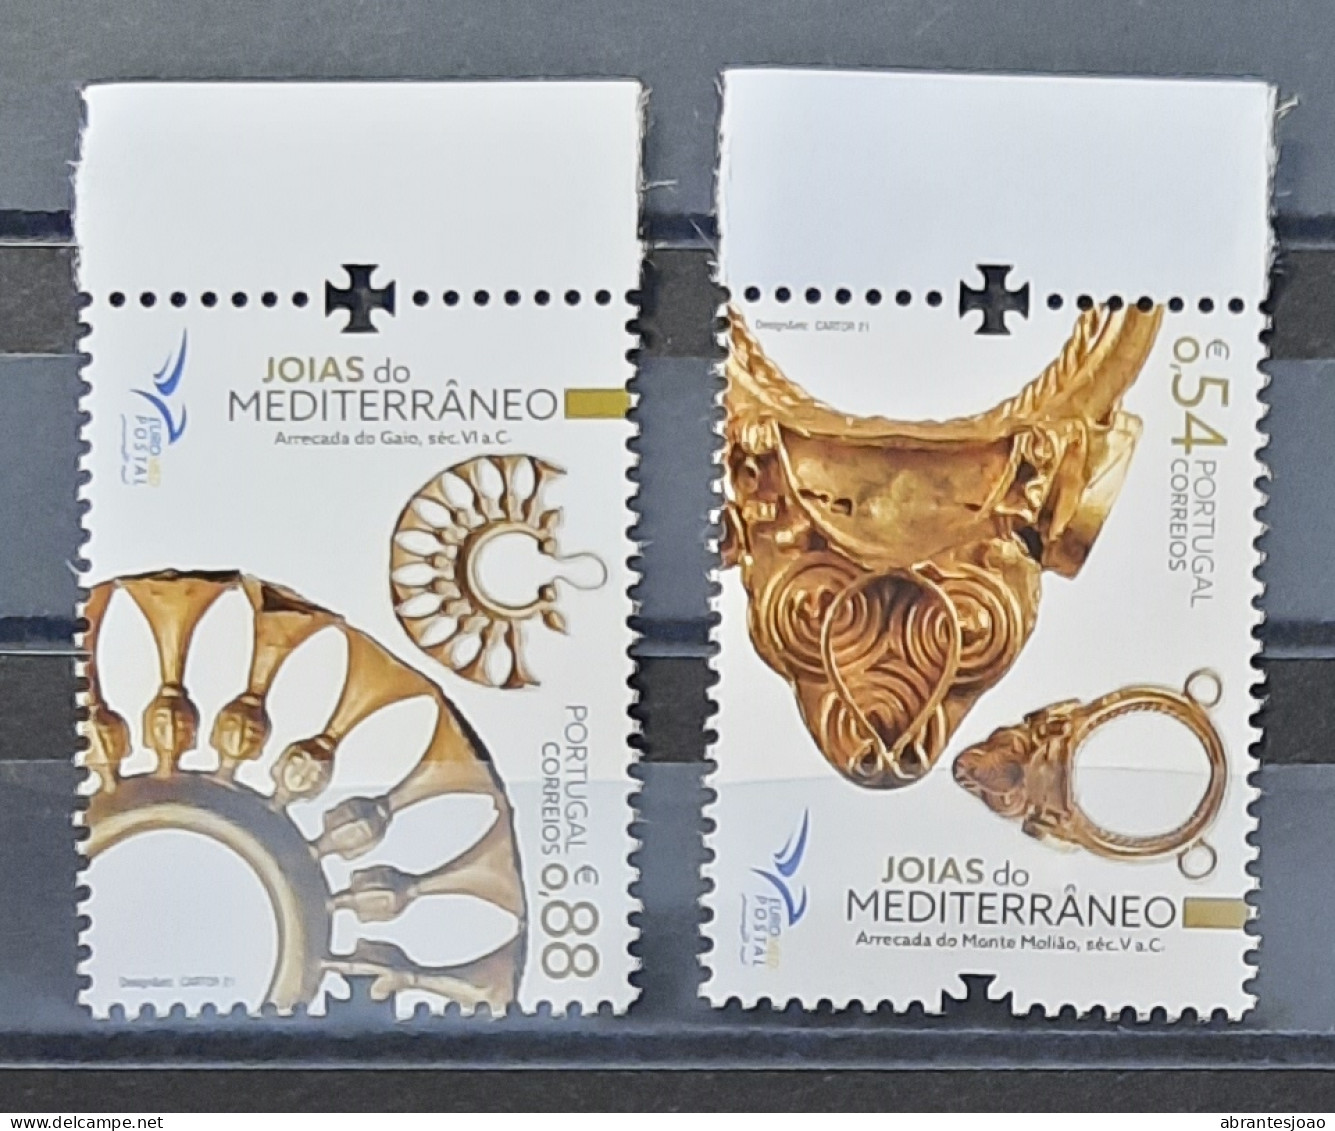 2021 - Portugal - MNH - EUROMED POSTAL - Jewels Of Mediterranean - 2 Stamps - Unused Stamps